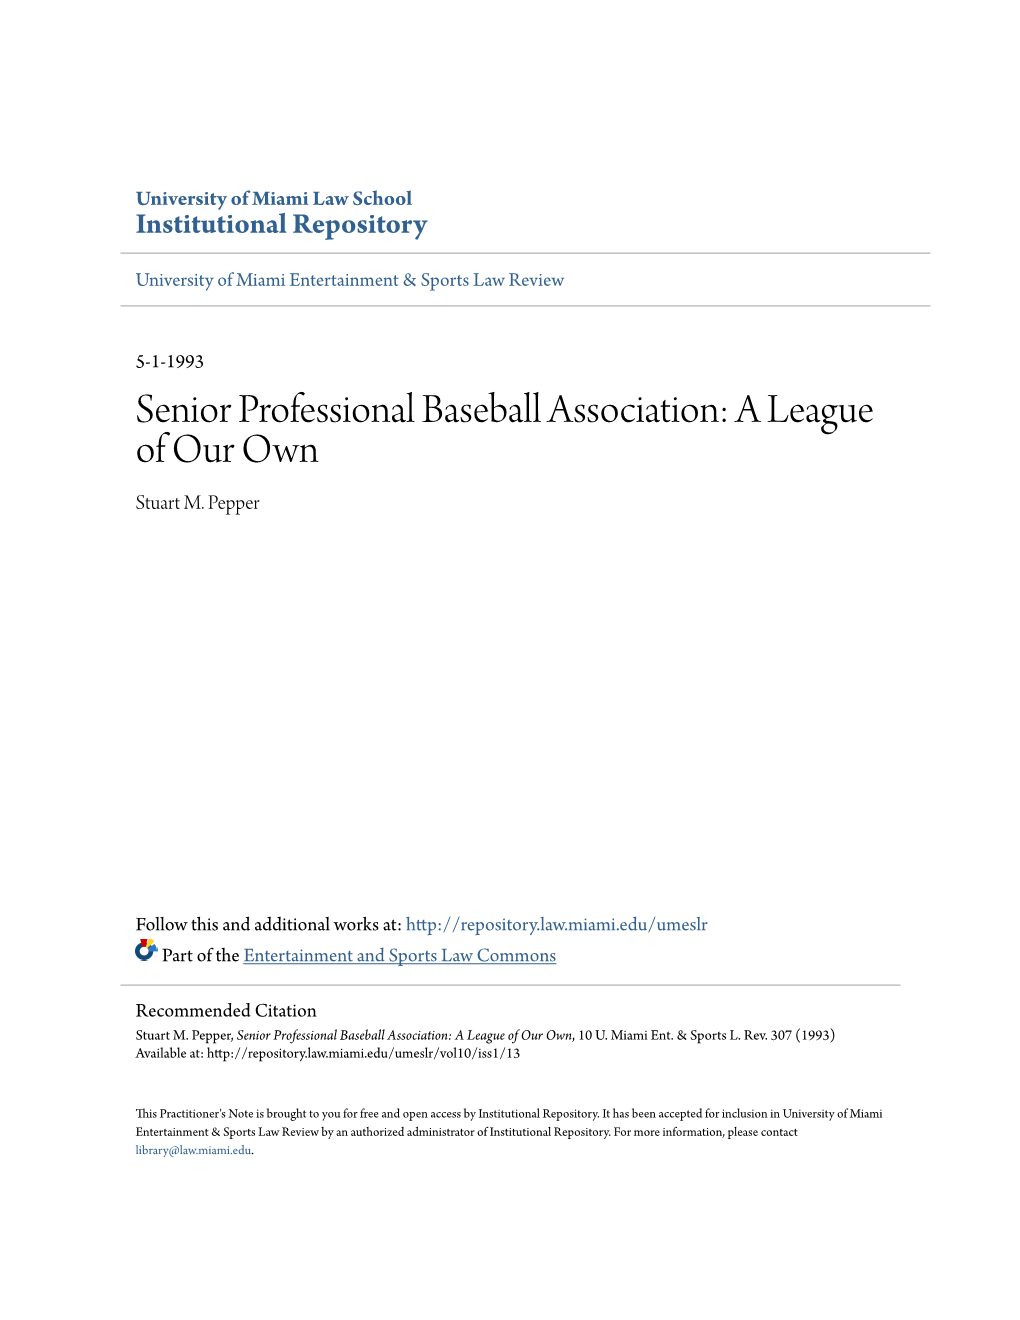 Senior Professional Baseball Association: a League of Our Own Stuart M